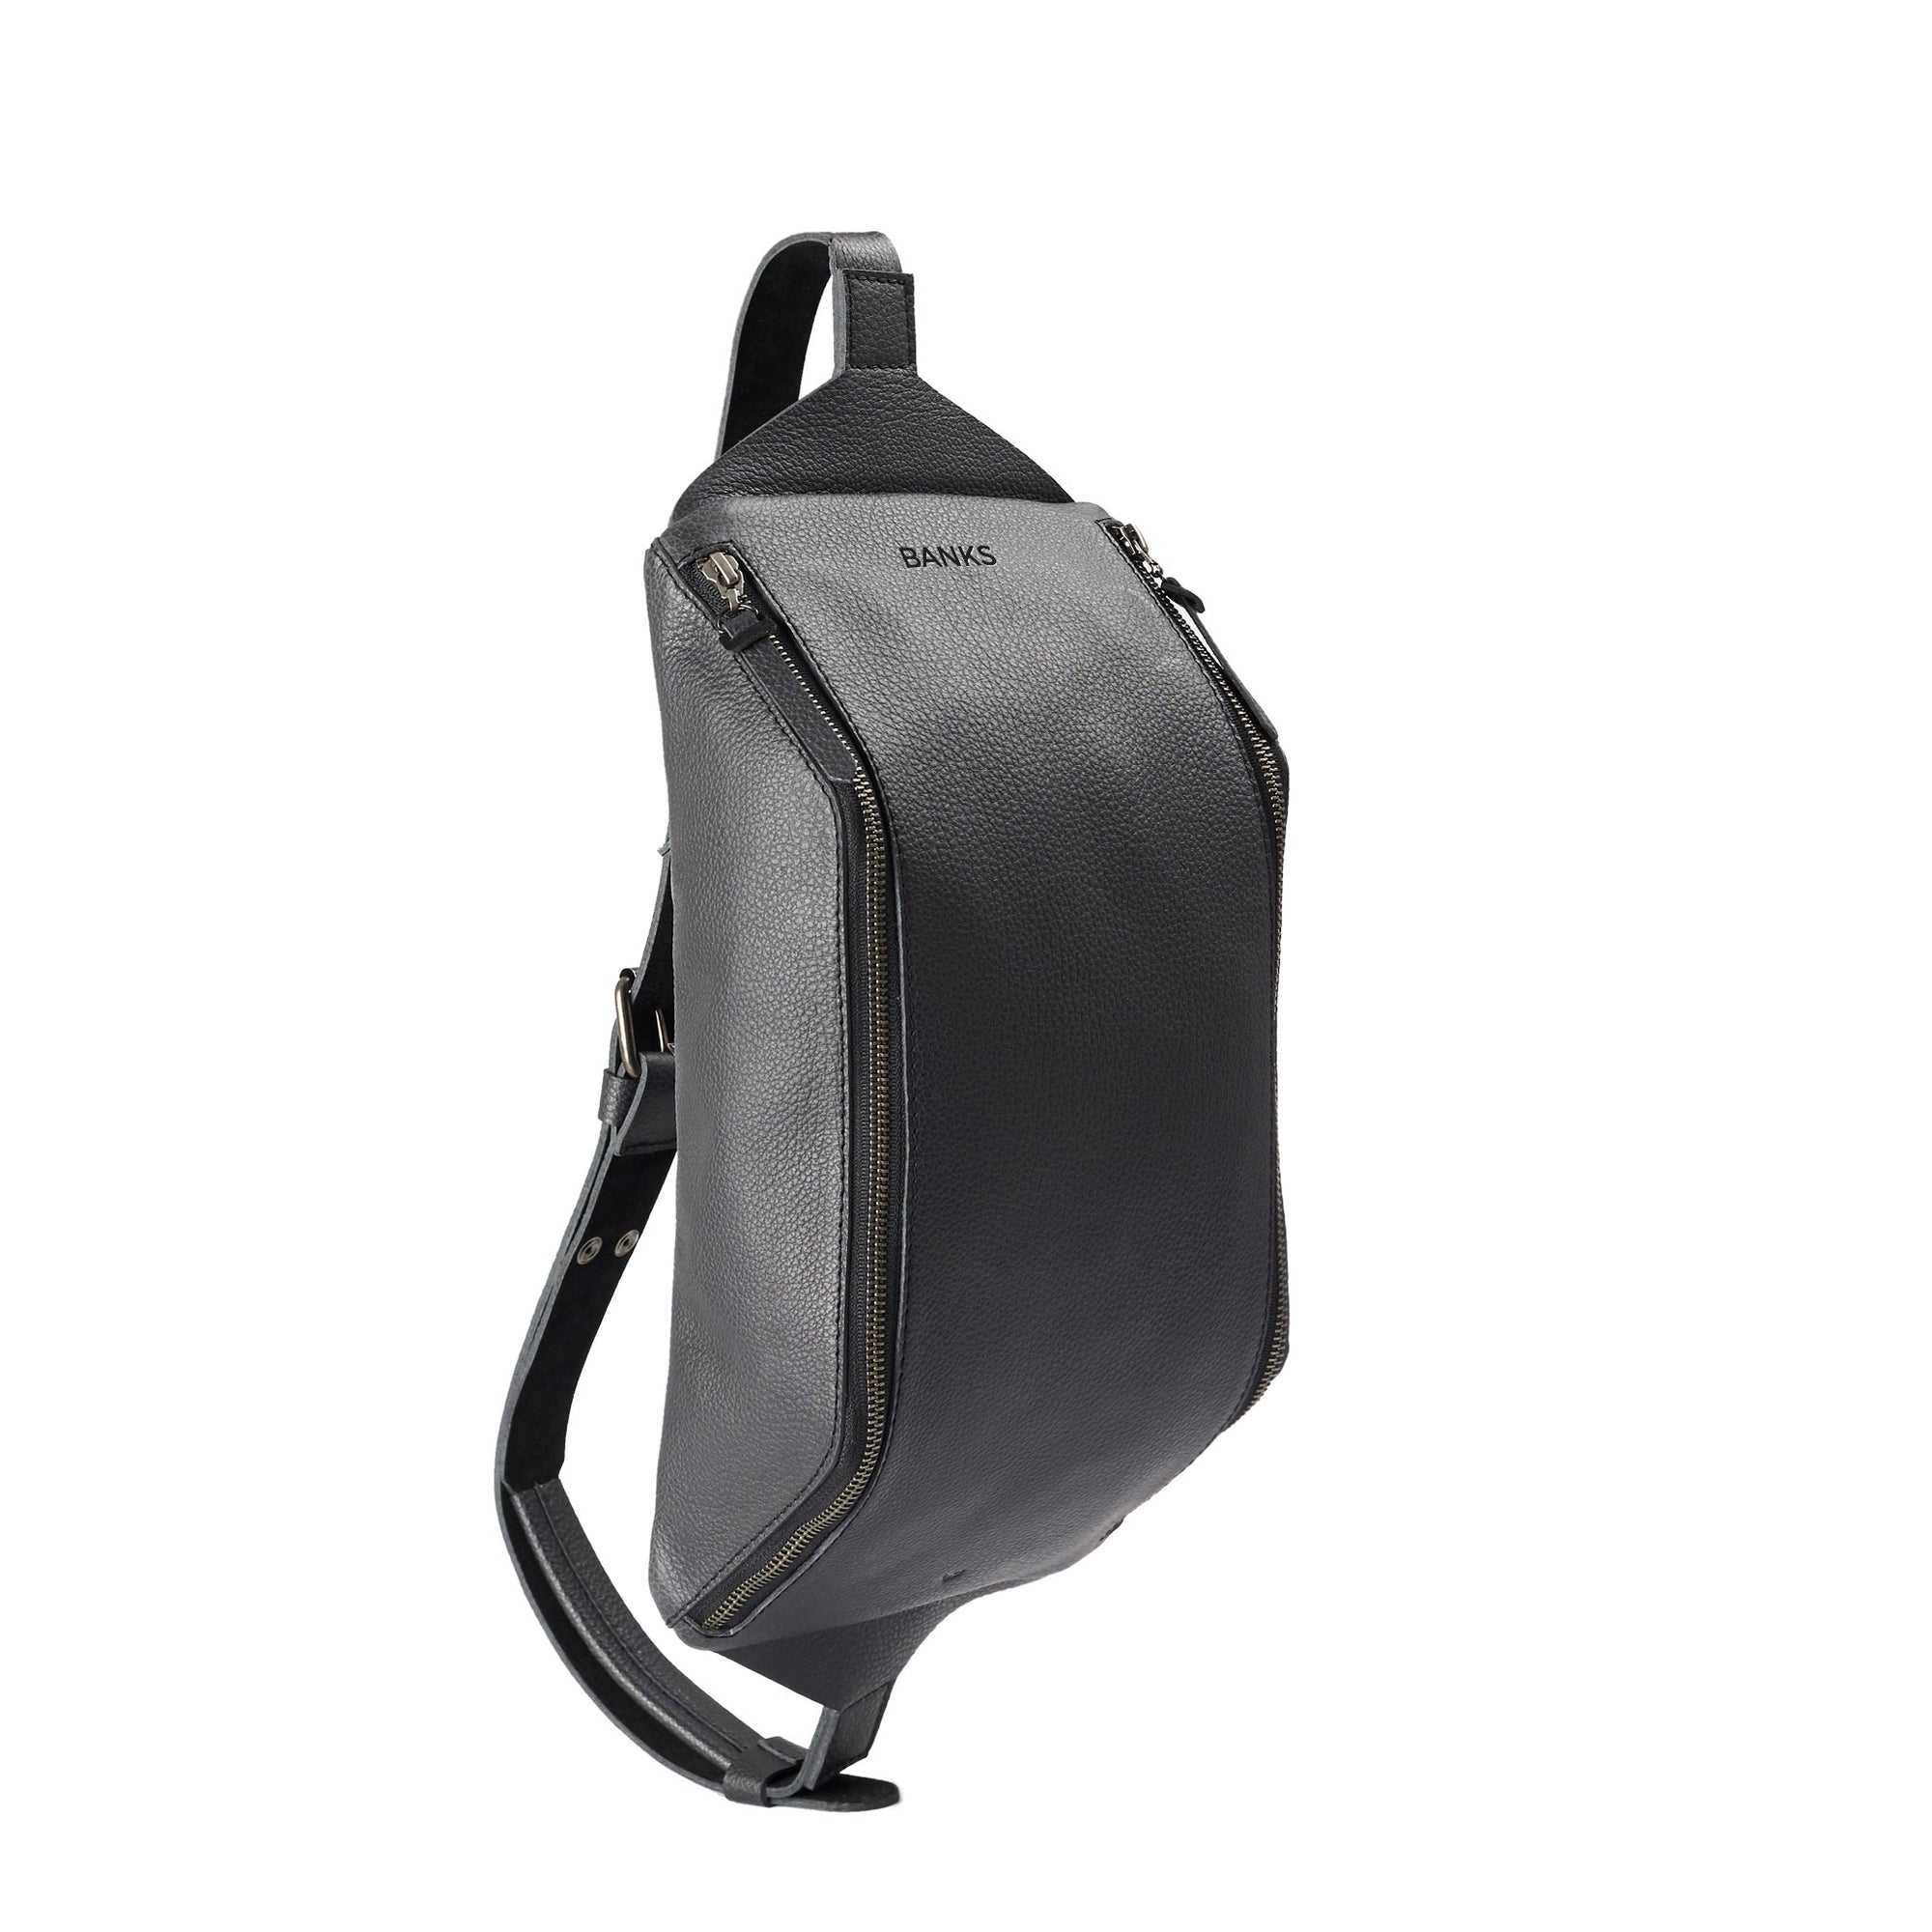 Engraving detail. Black Fenek sling bag backpack made by Capra Leather. Styling of over the shoulder festival bicycle bag.